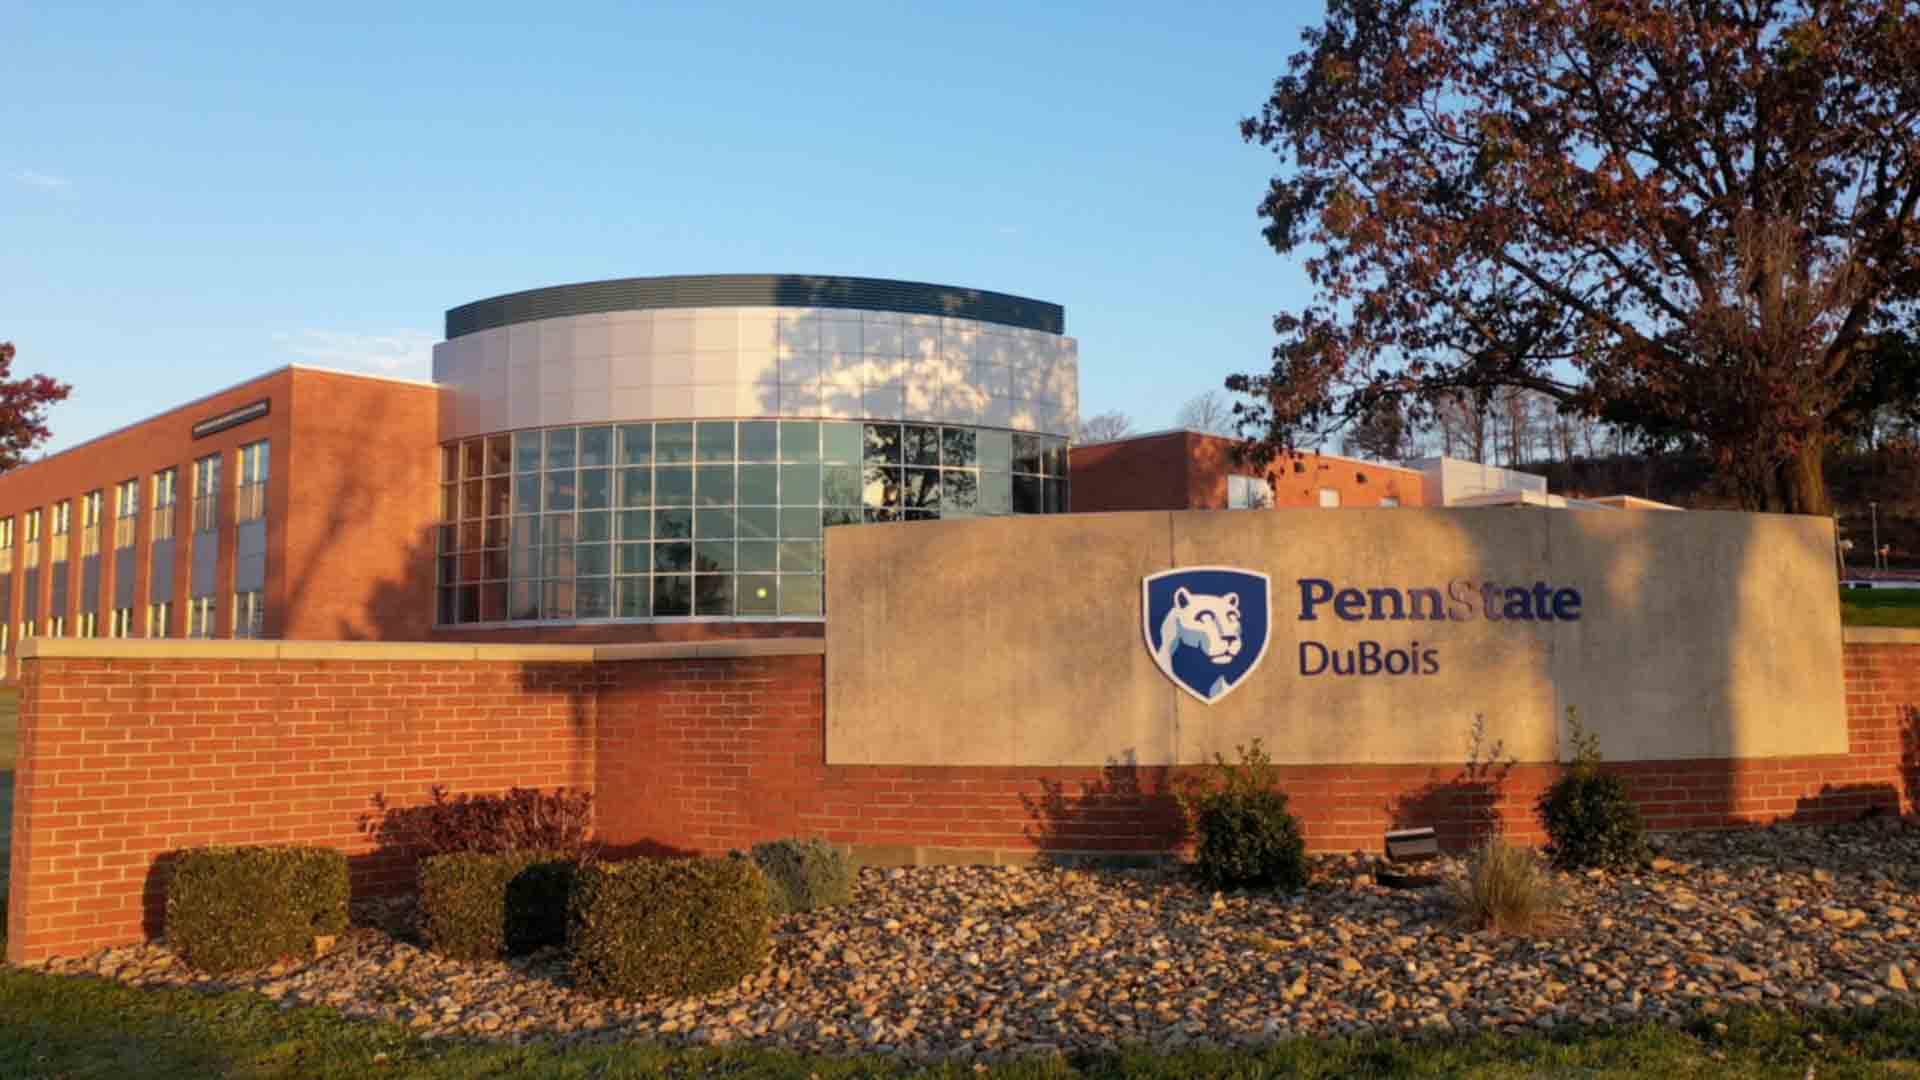 Penn State DuBois